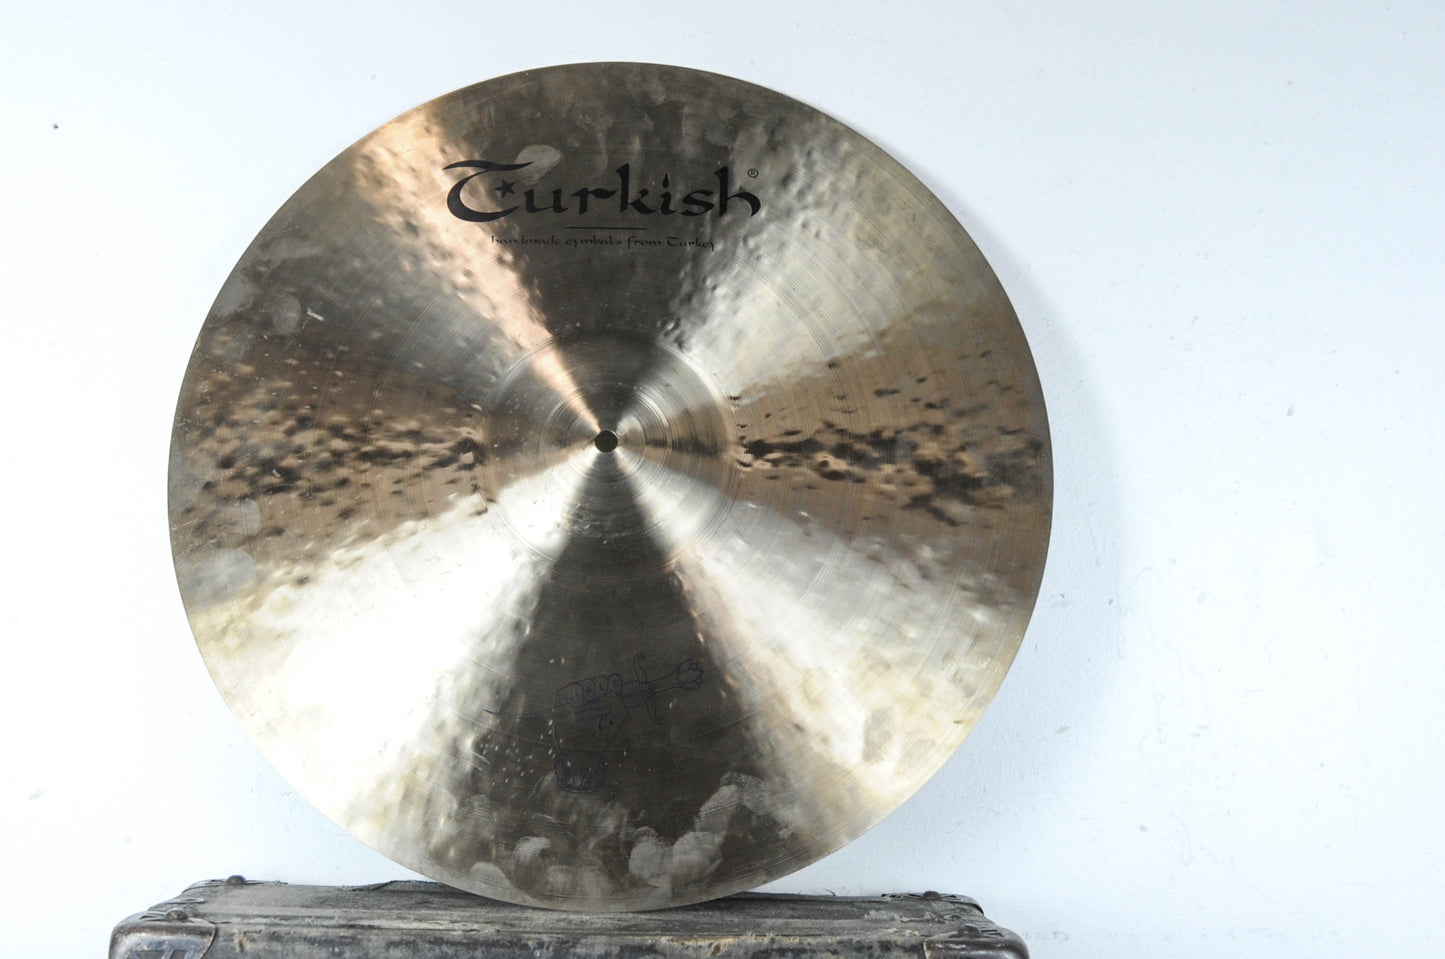 Turkish Cymbals 20" Signature Series Lale Kardes Crash Cymbal 1796g